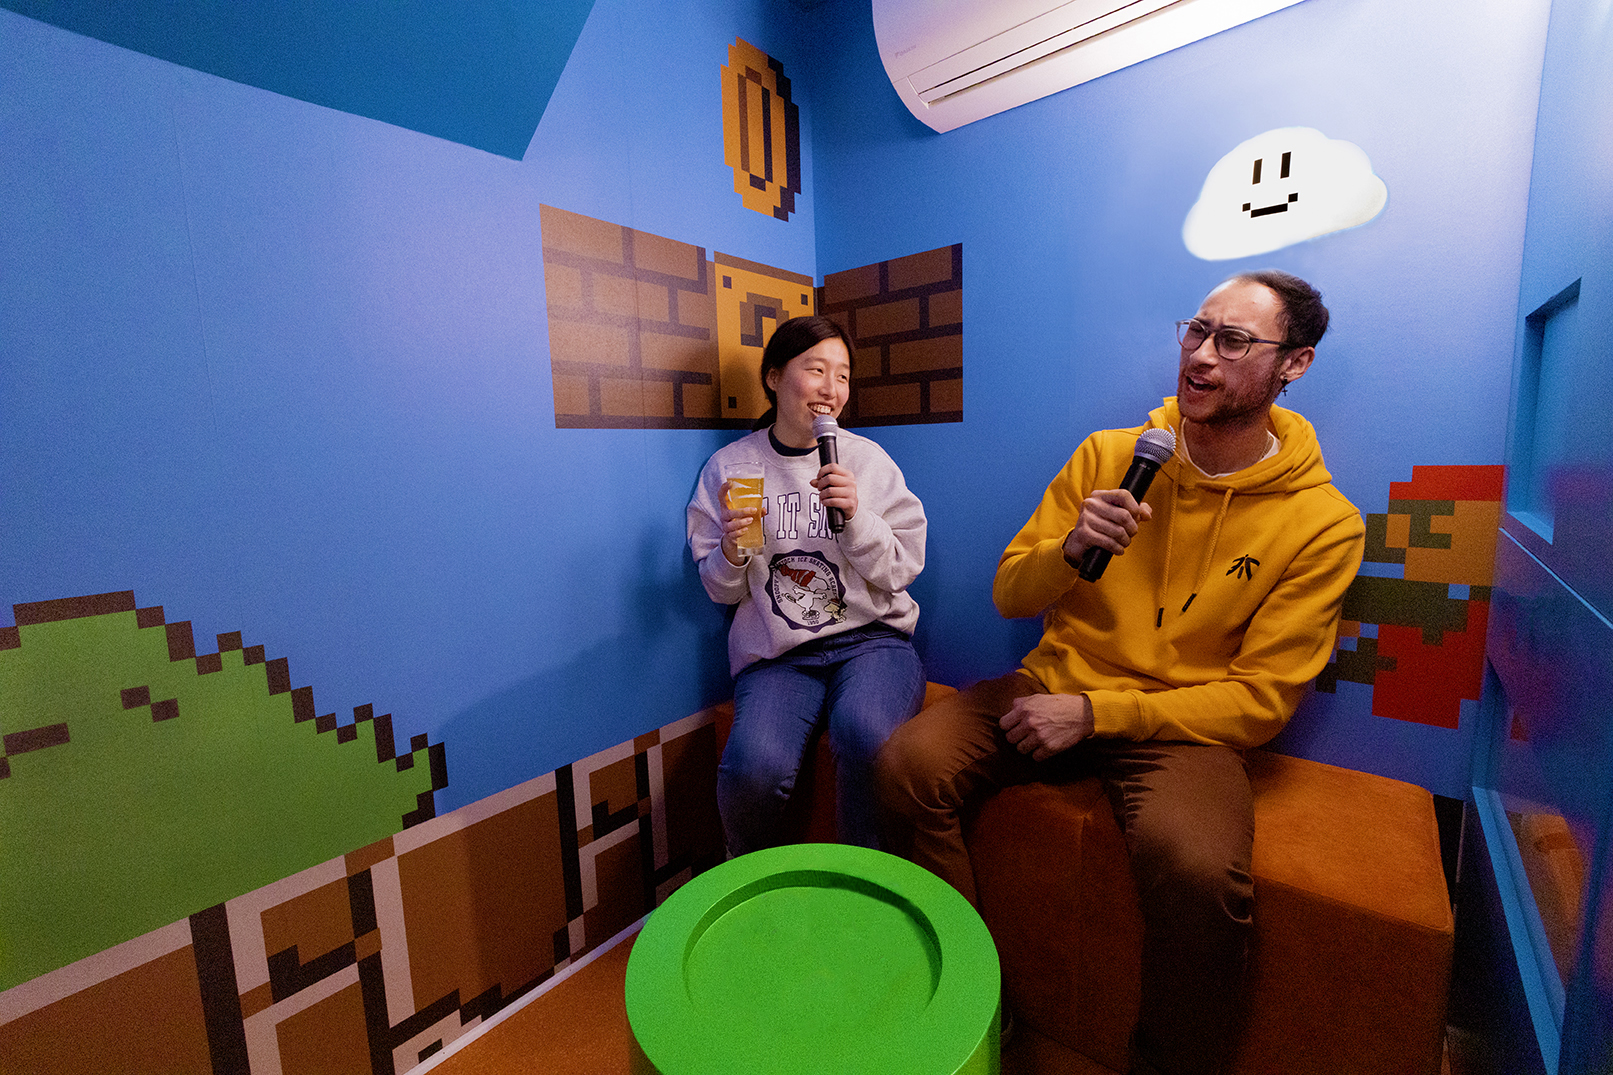 karaoke-box-video-game-kokekokko